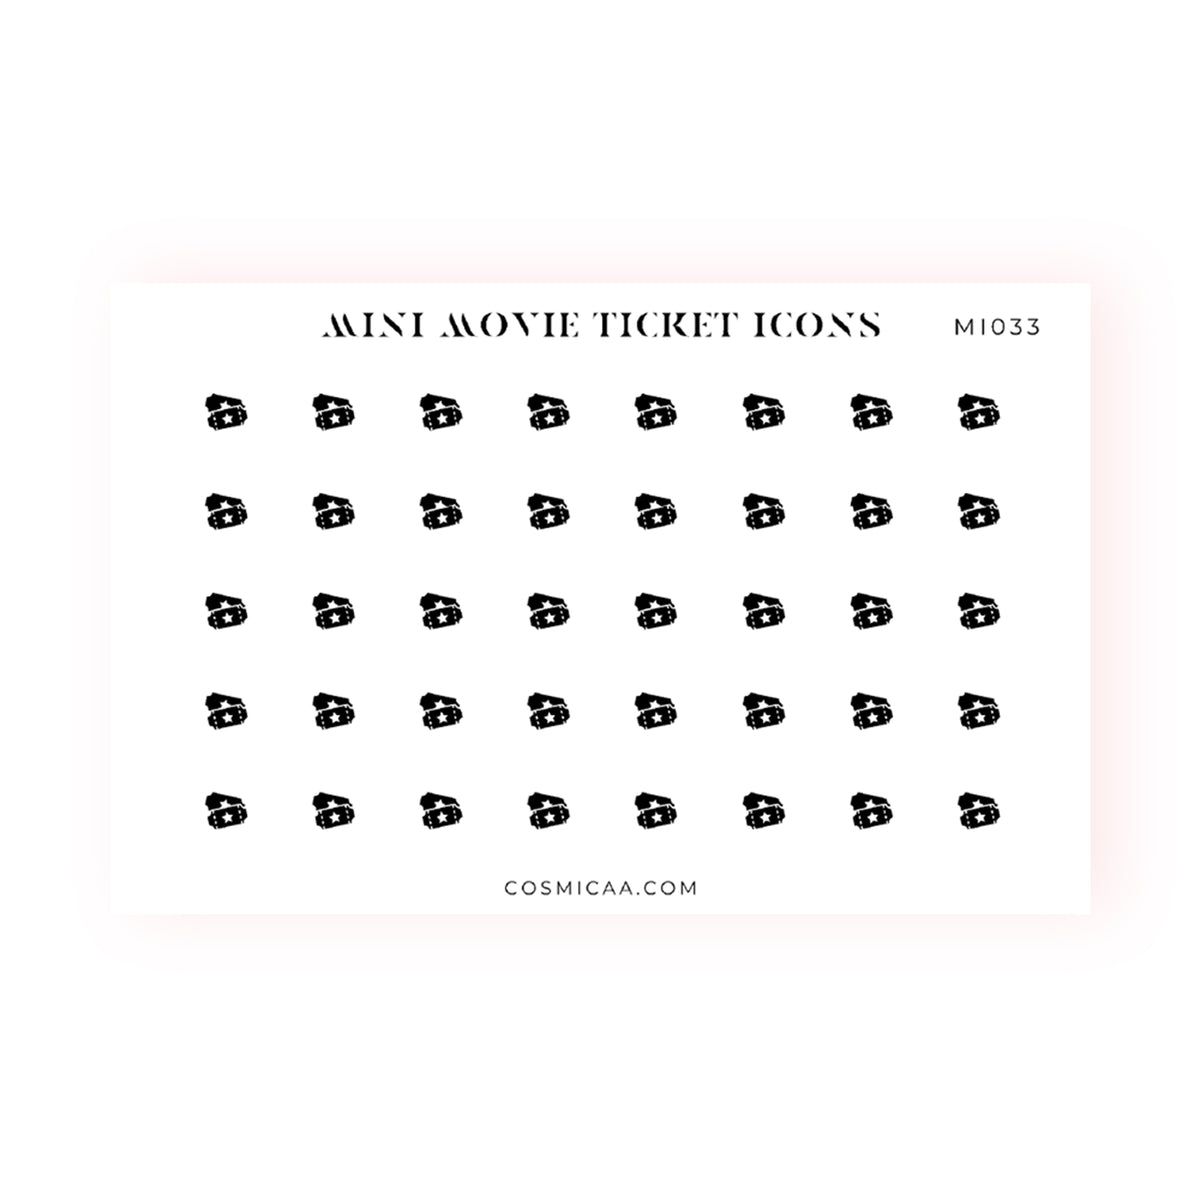 Mini Movie Ticket Icons - Planner stickers